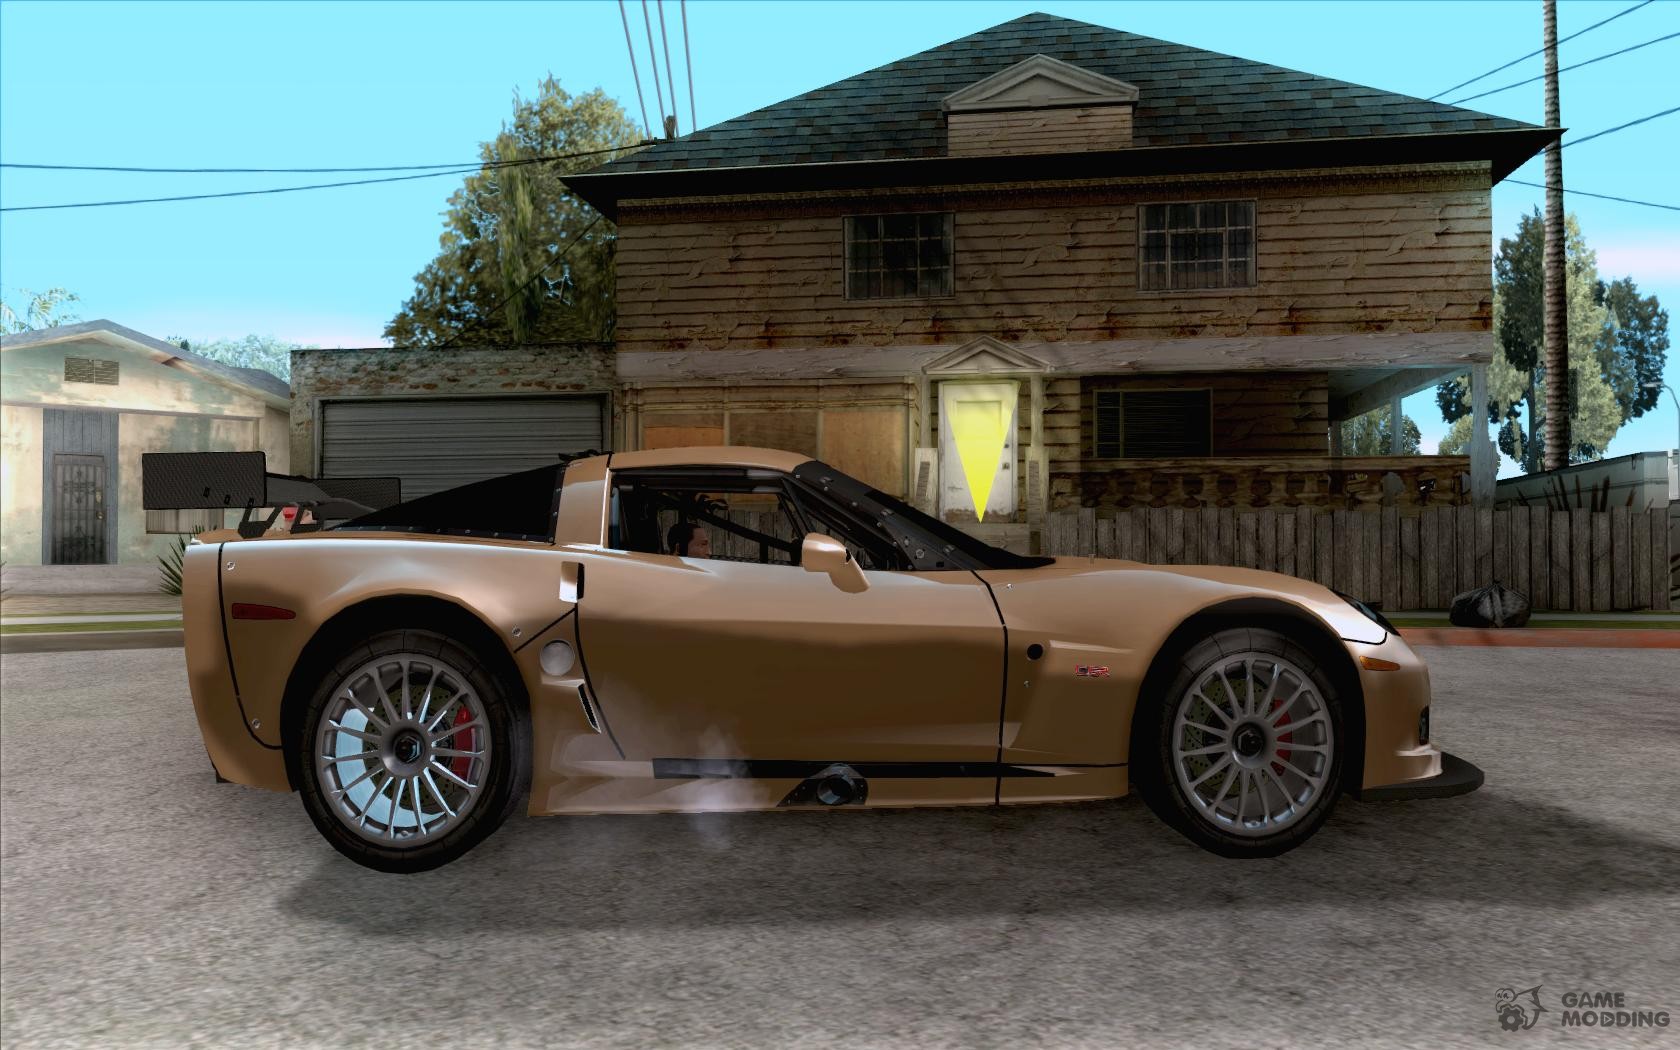 Chevrolet Cross Corvette C6 (Pepega Edition) for GTA San Andreas